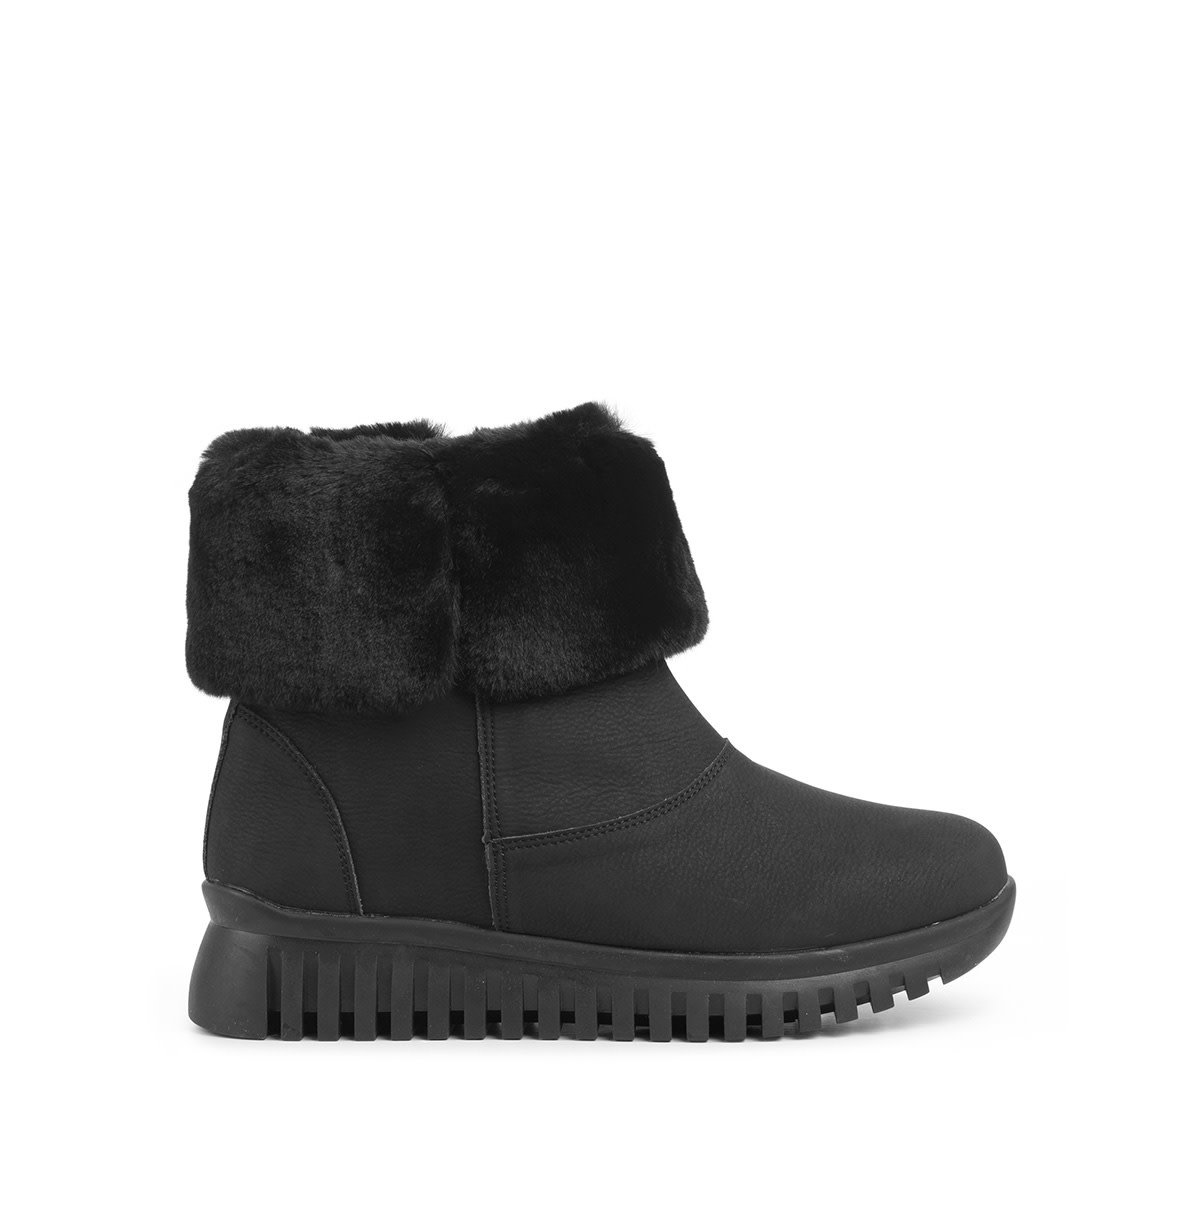 Winter boots by Ilse Jacobsen | Faux Suede | Cashmere Essentials ...